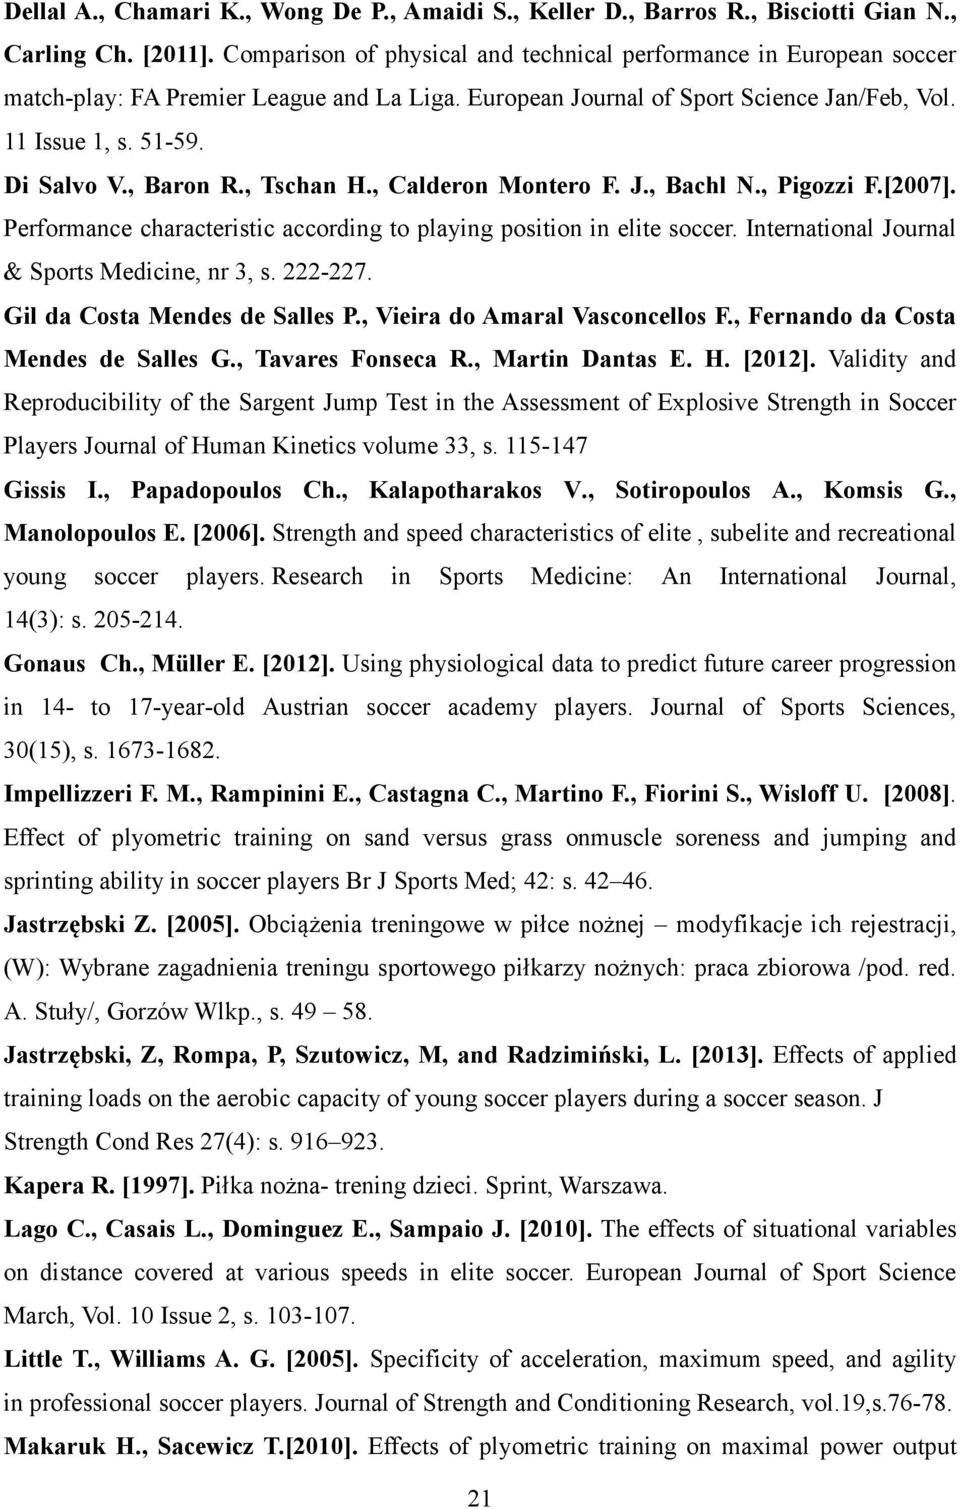 , Baron R., Tschan H., Calderon Montero F. J., Bachl., Pigozzi F.[2007]. Performance characteristic according to playing position in elite soccer. International Journal & Sports Medicine, nr 3, s.